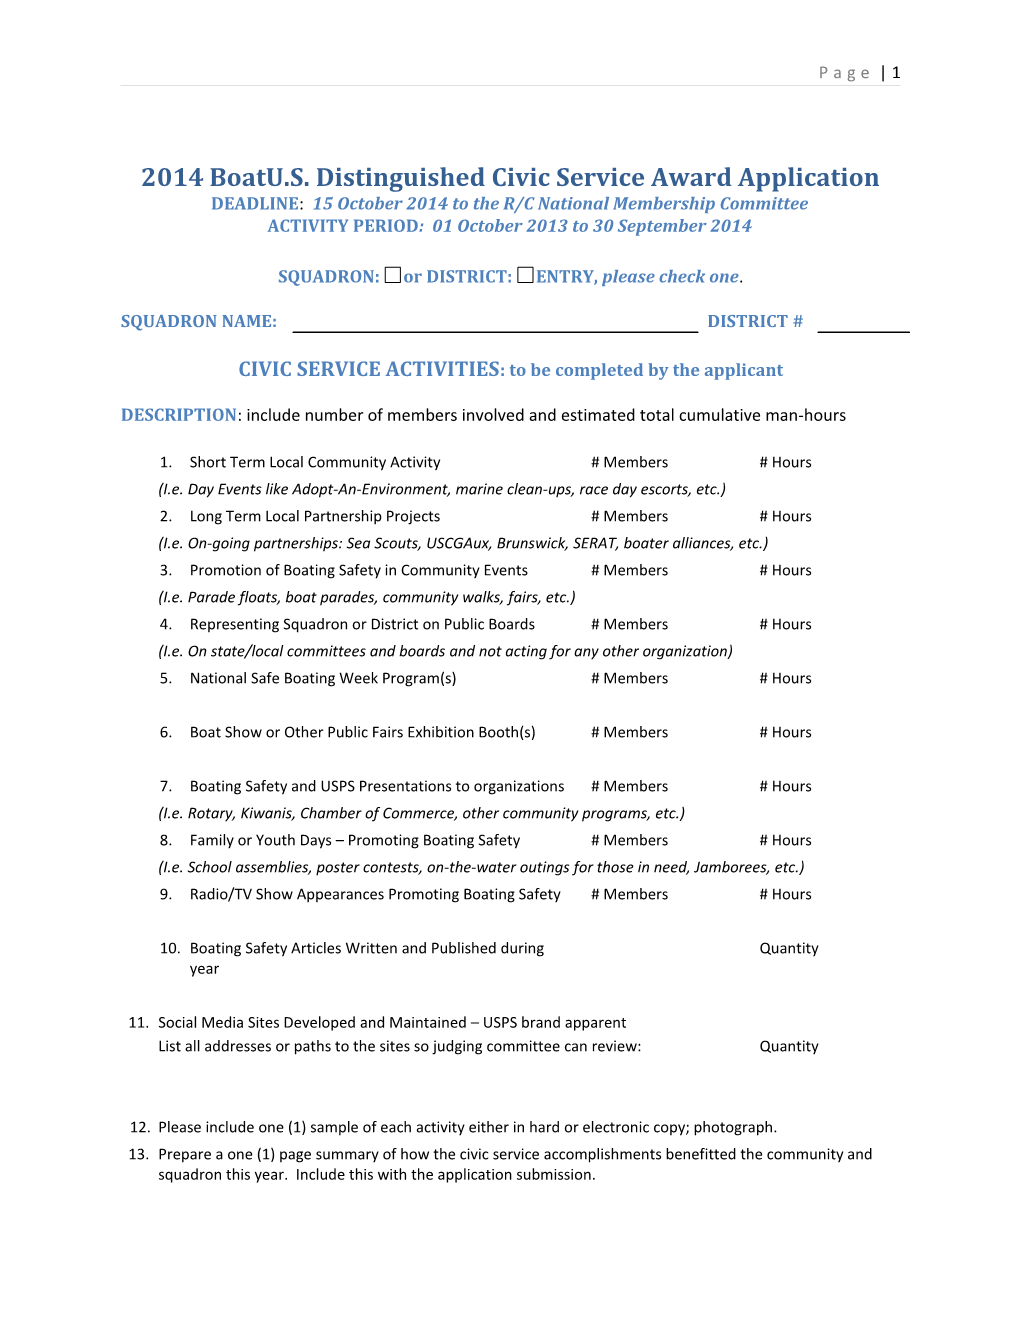 2014Boatu.S. Distinguished Civic Service Award Application